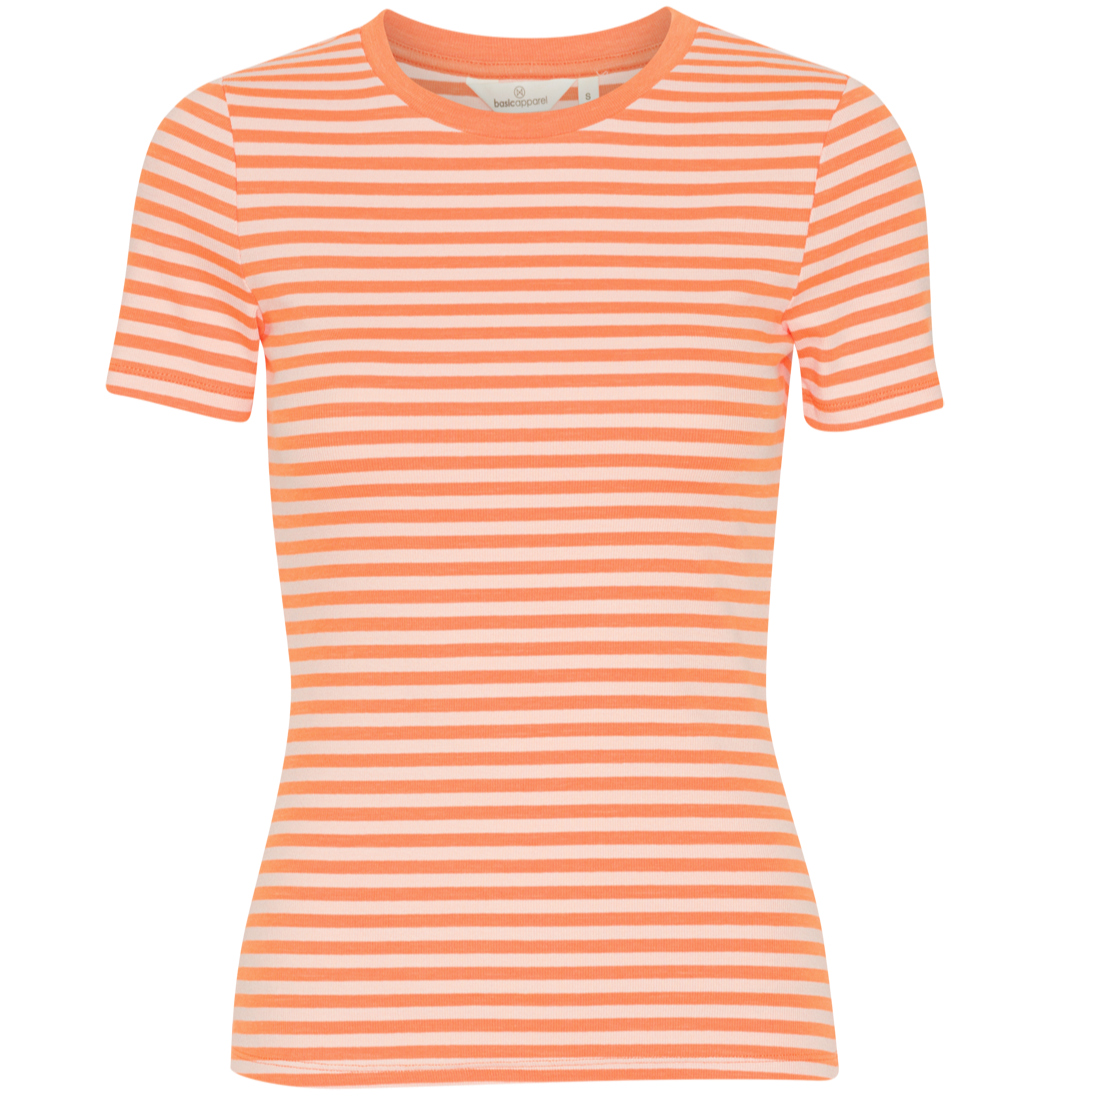 Basic Apparel Ludmilla O-Neck T-shirts 562 Mandarin Orange/Salmon